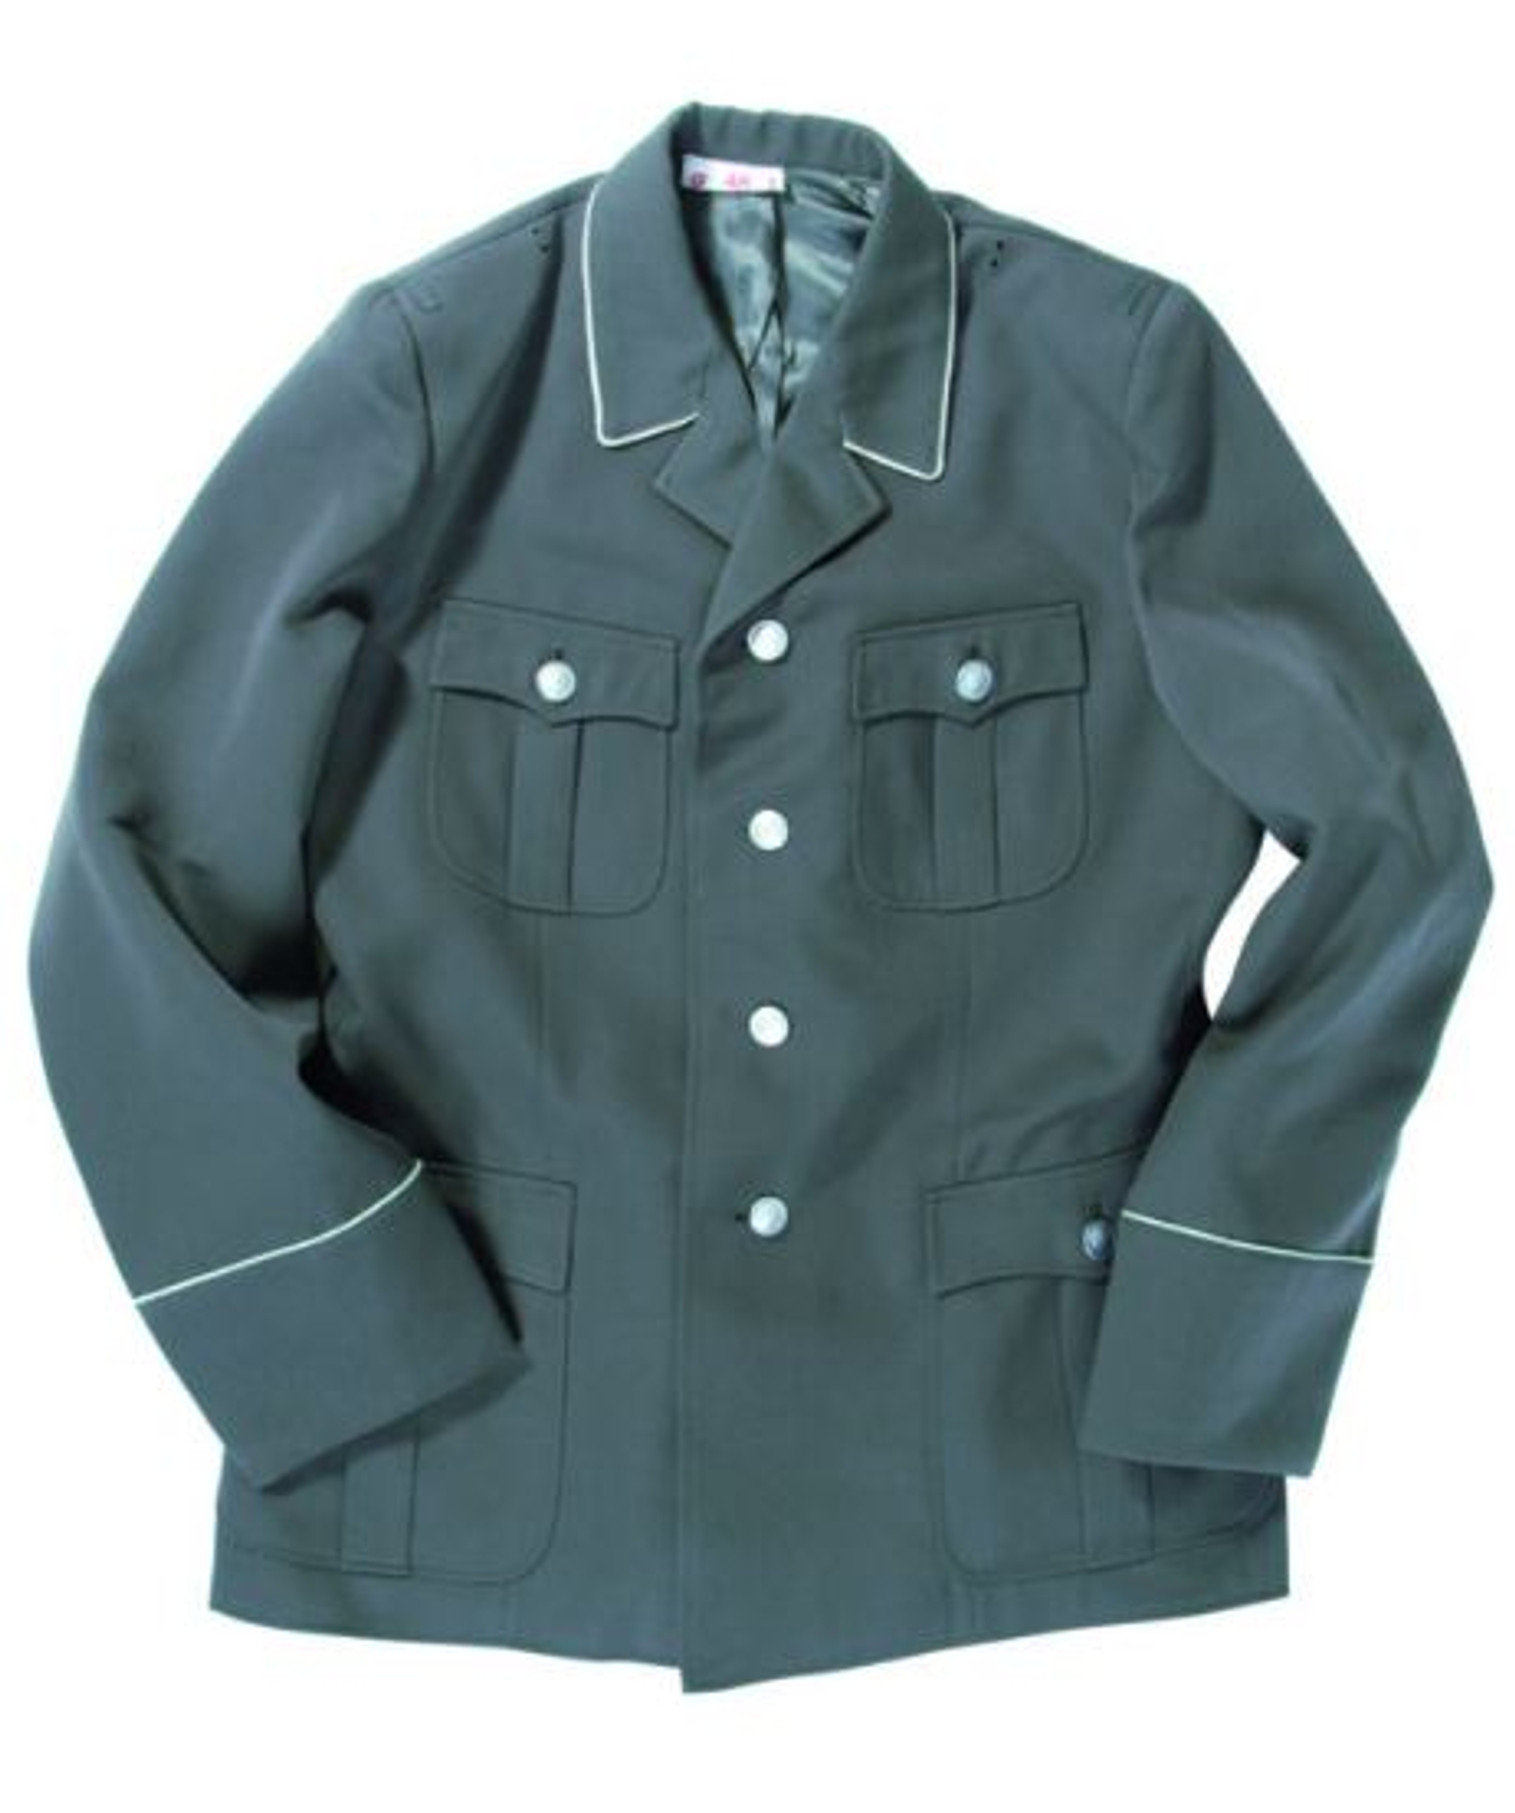 East German Armed Forces Uniform Jacket